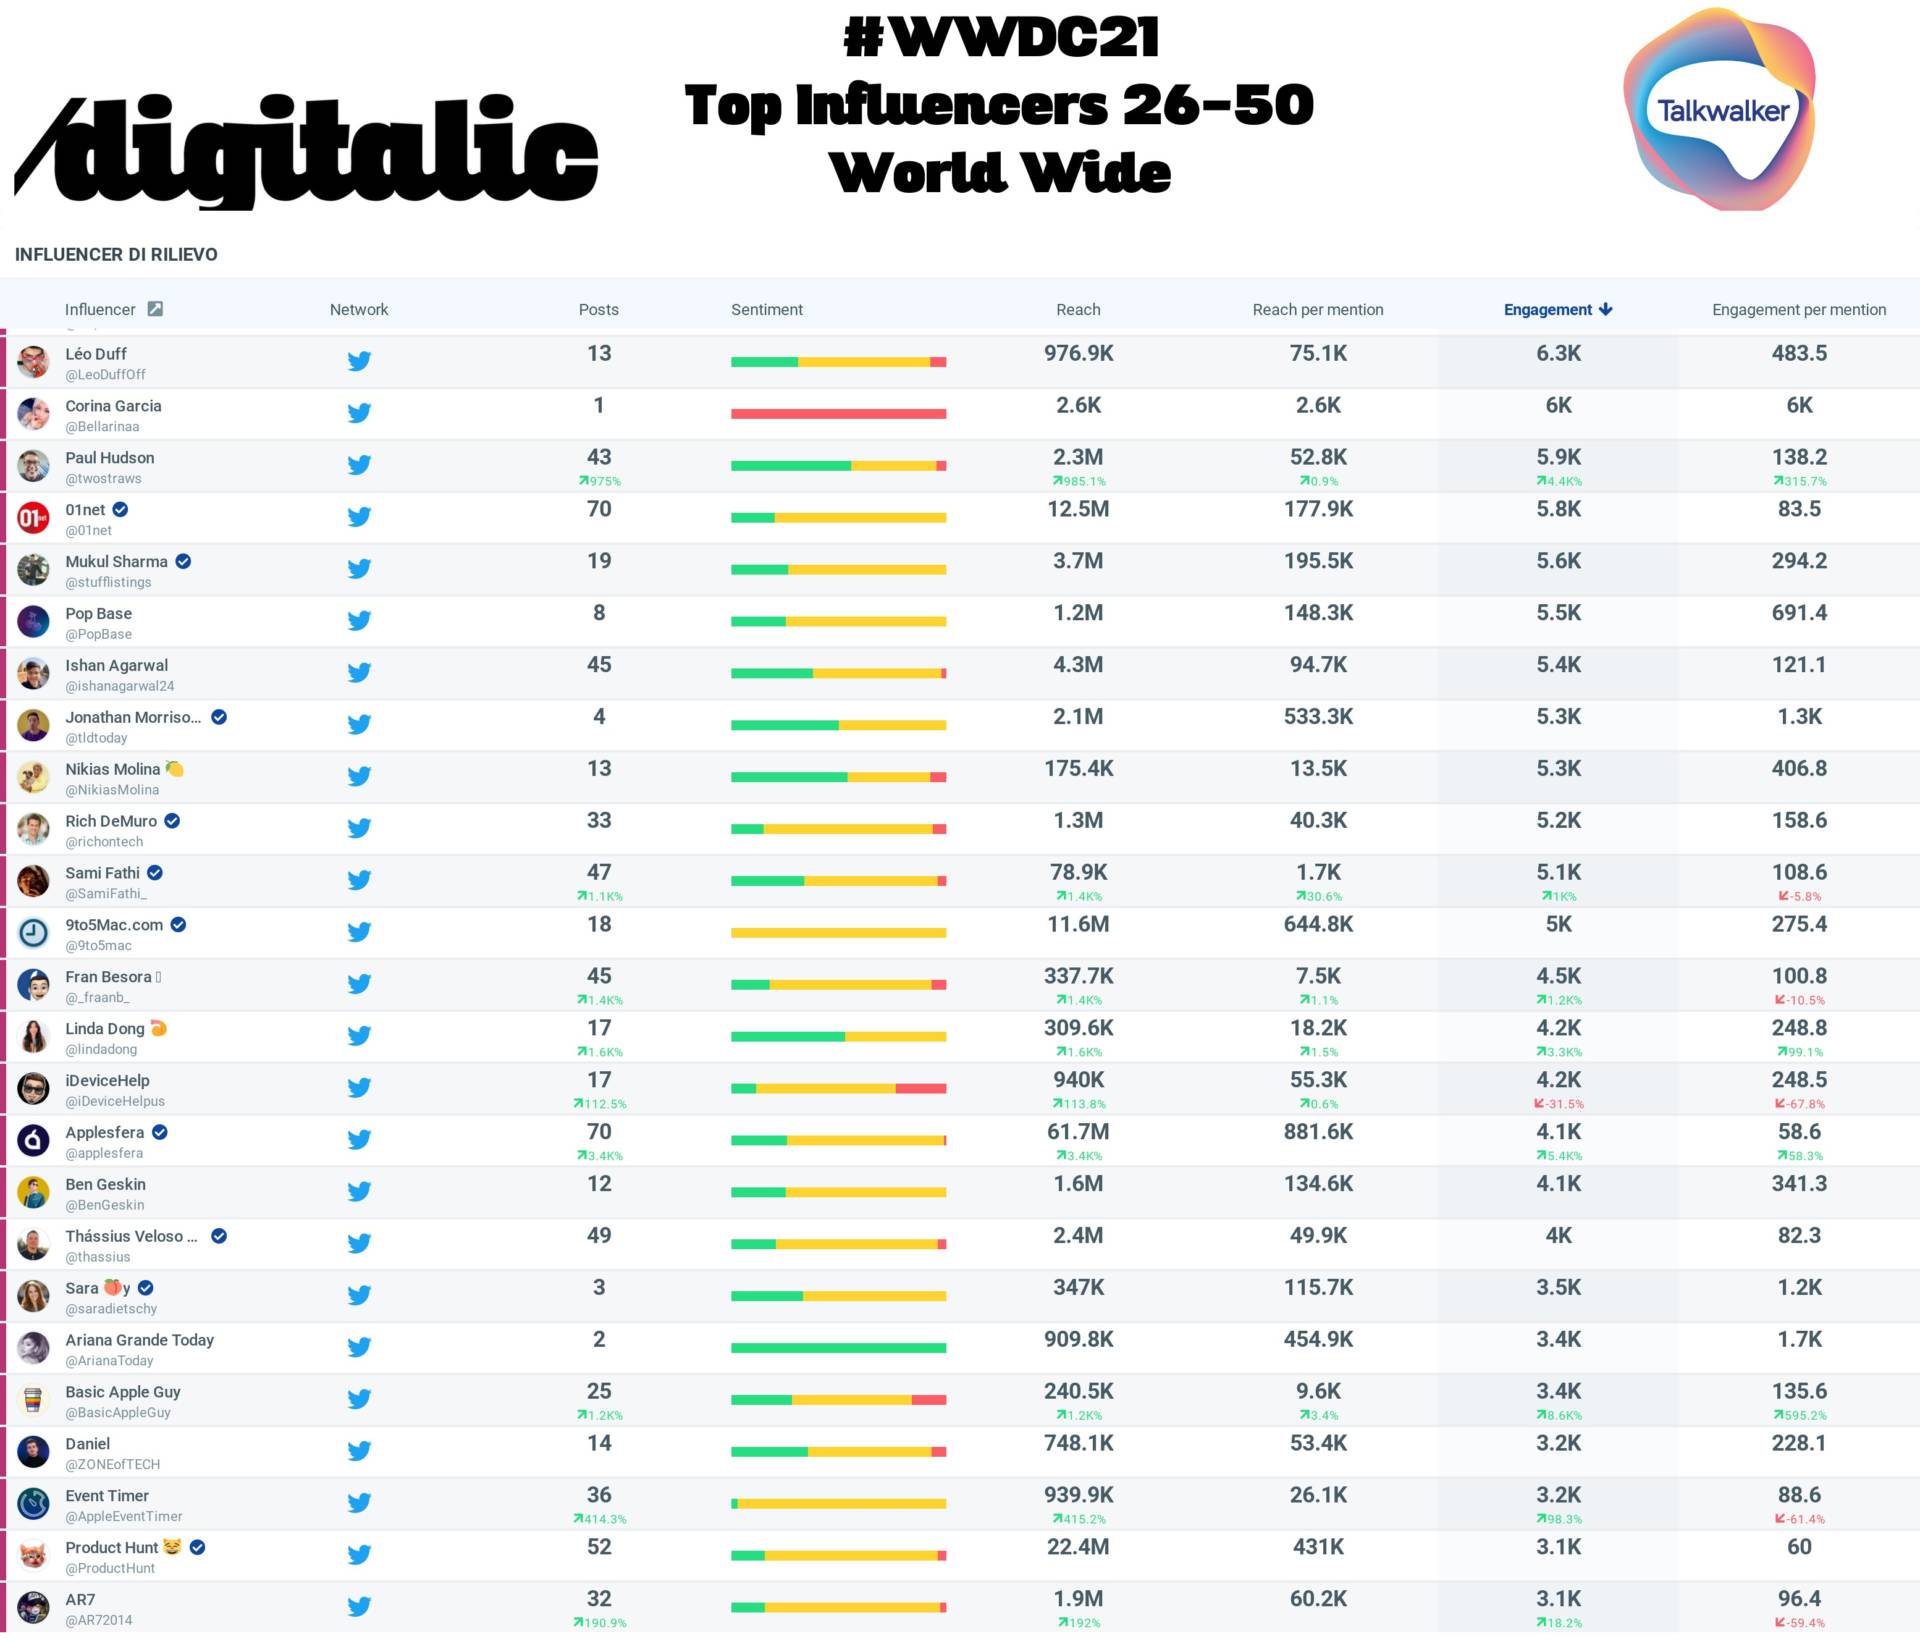 WWDC21 top 26-50 influencers WorldWide